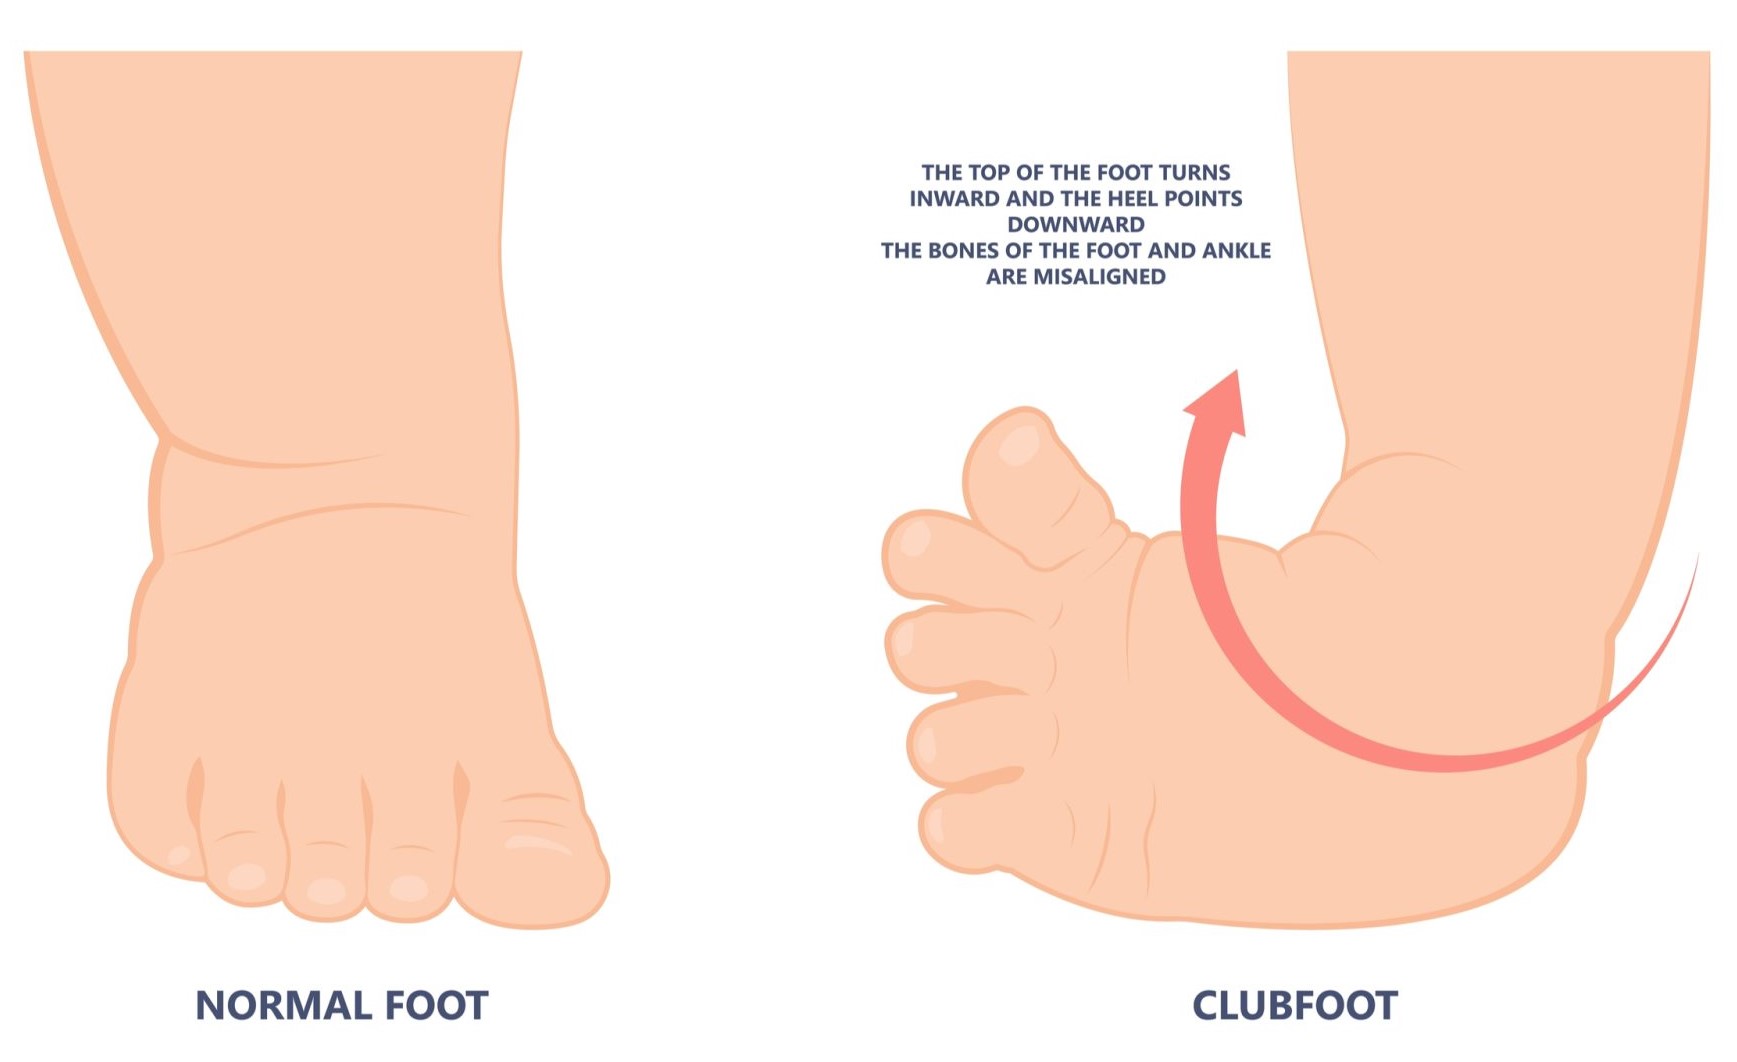 Club foot